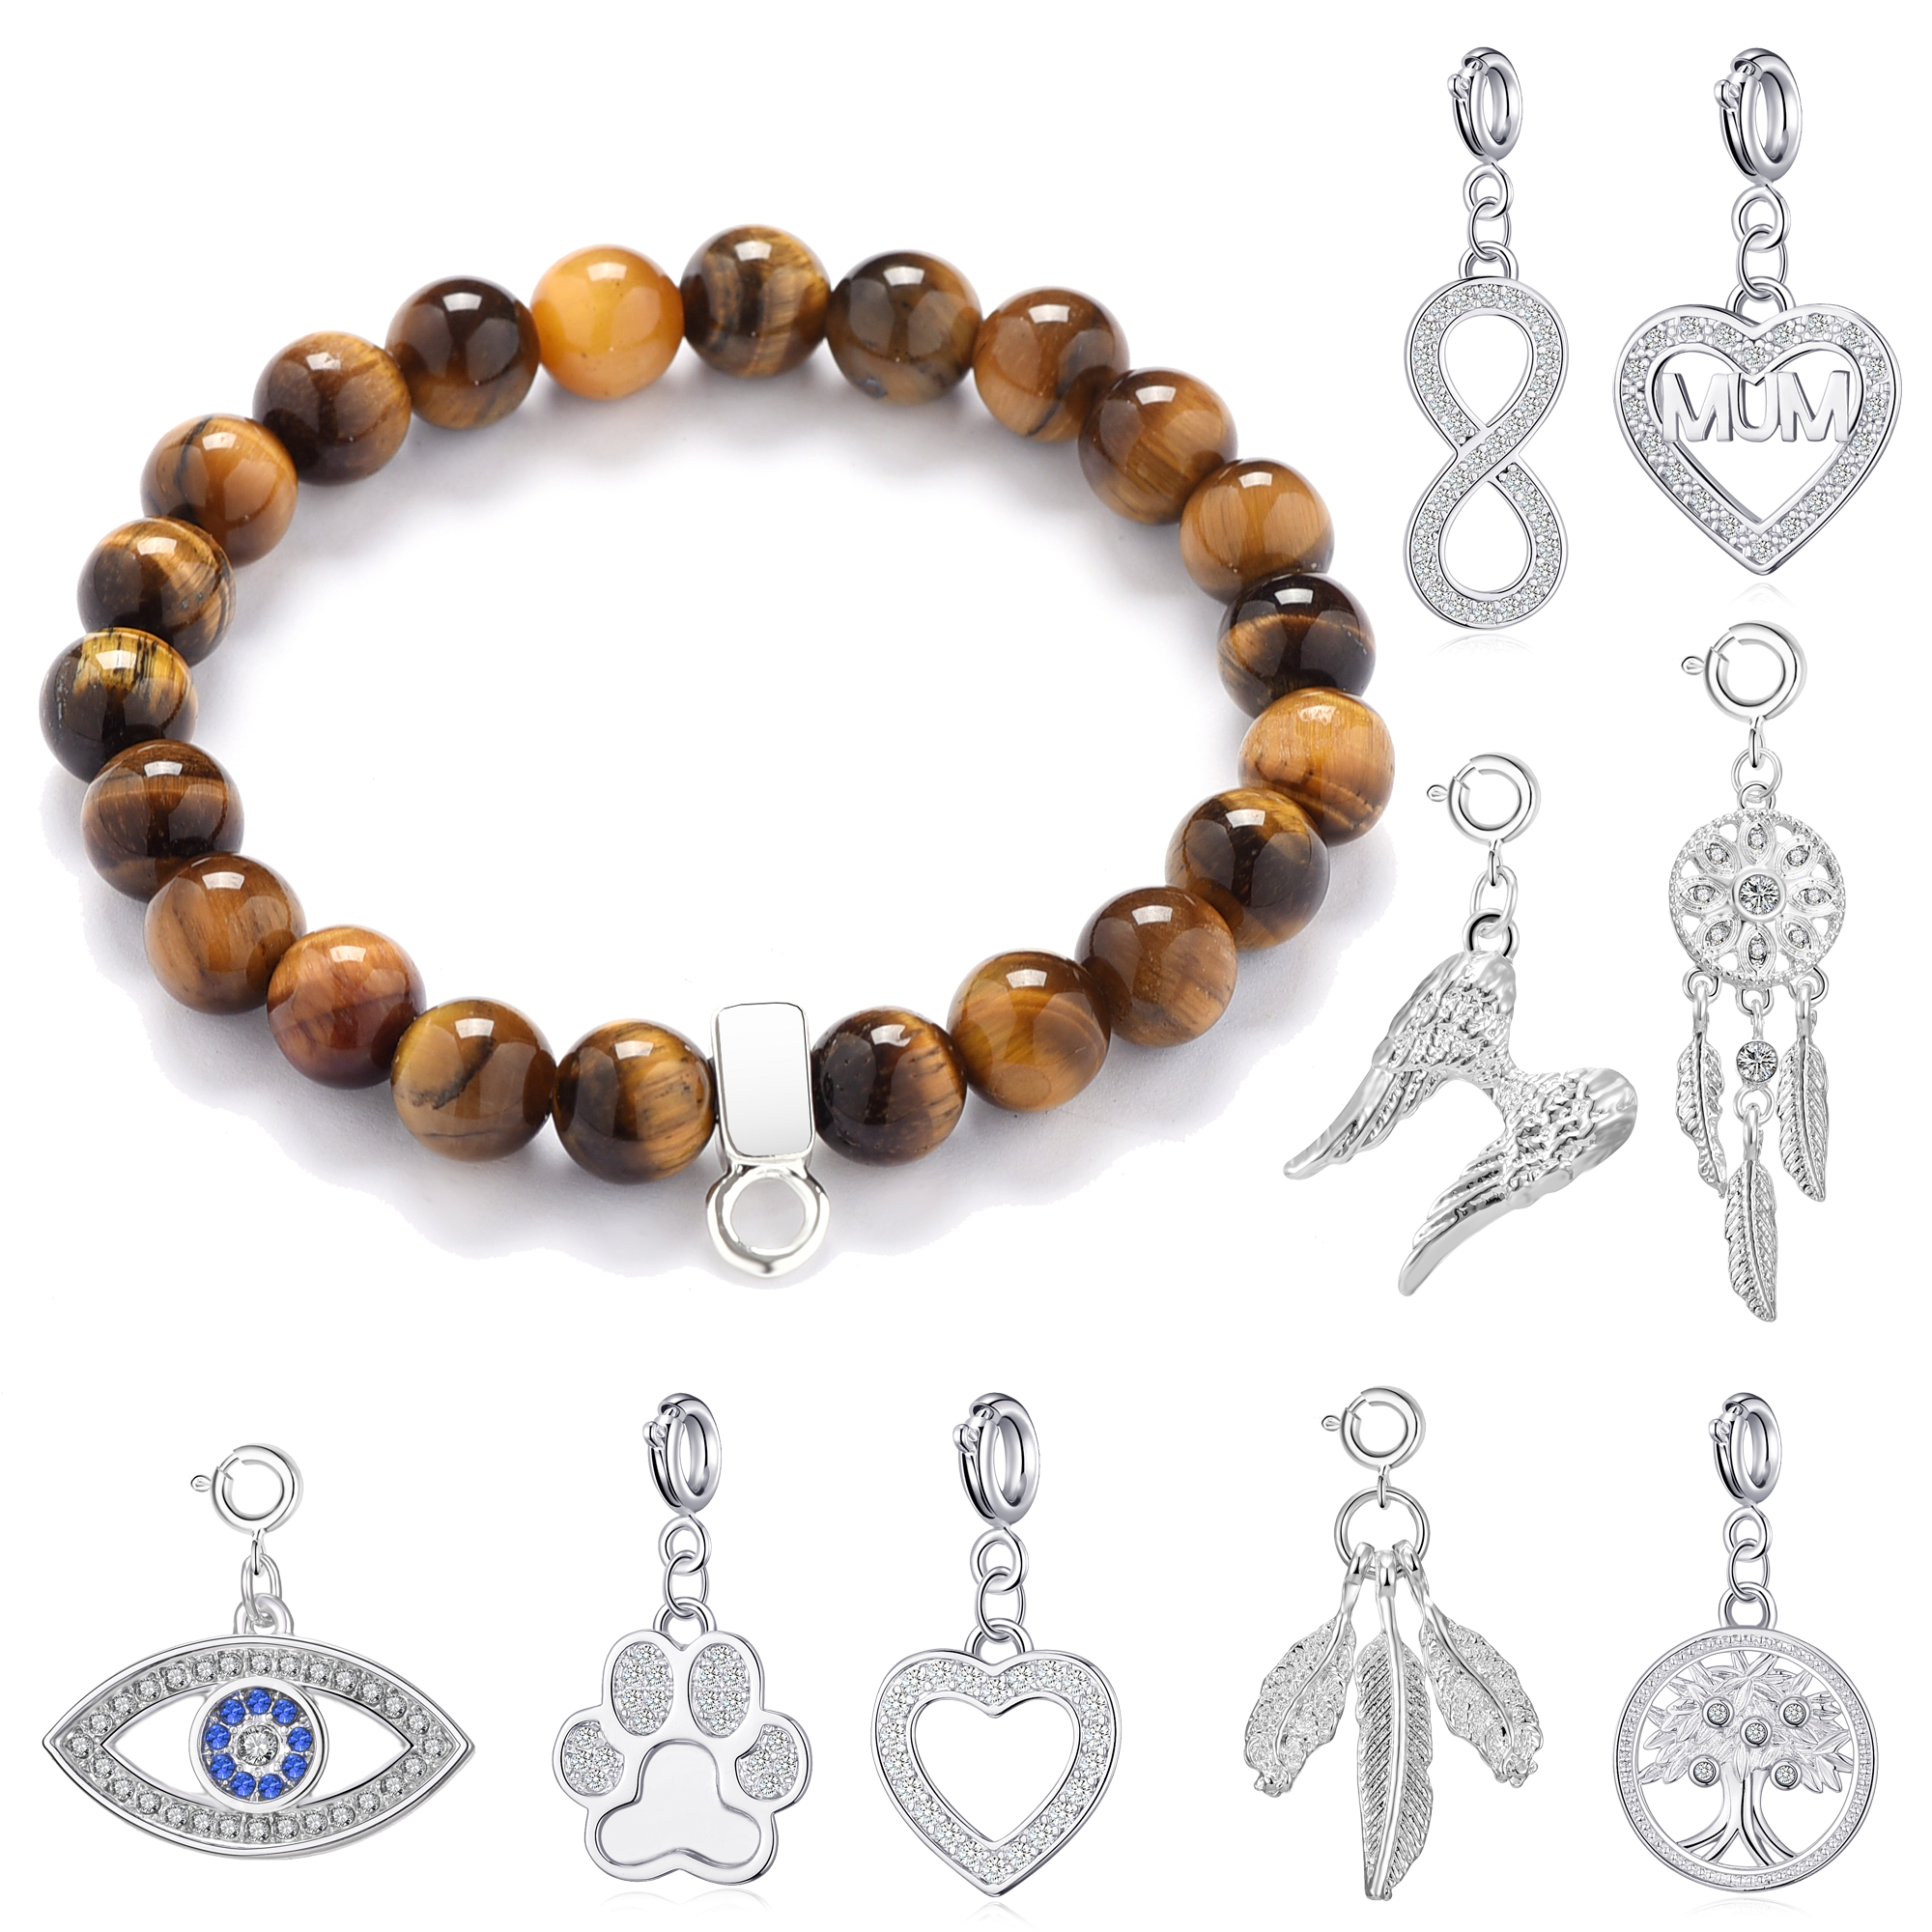 Tiger's Eye Gemstone Bracelet with Charm Created with Zircondia® Crystals